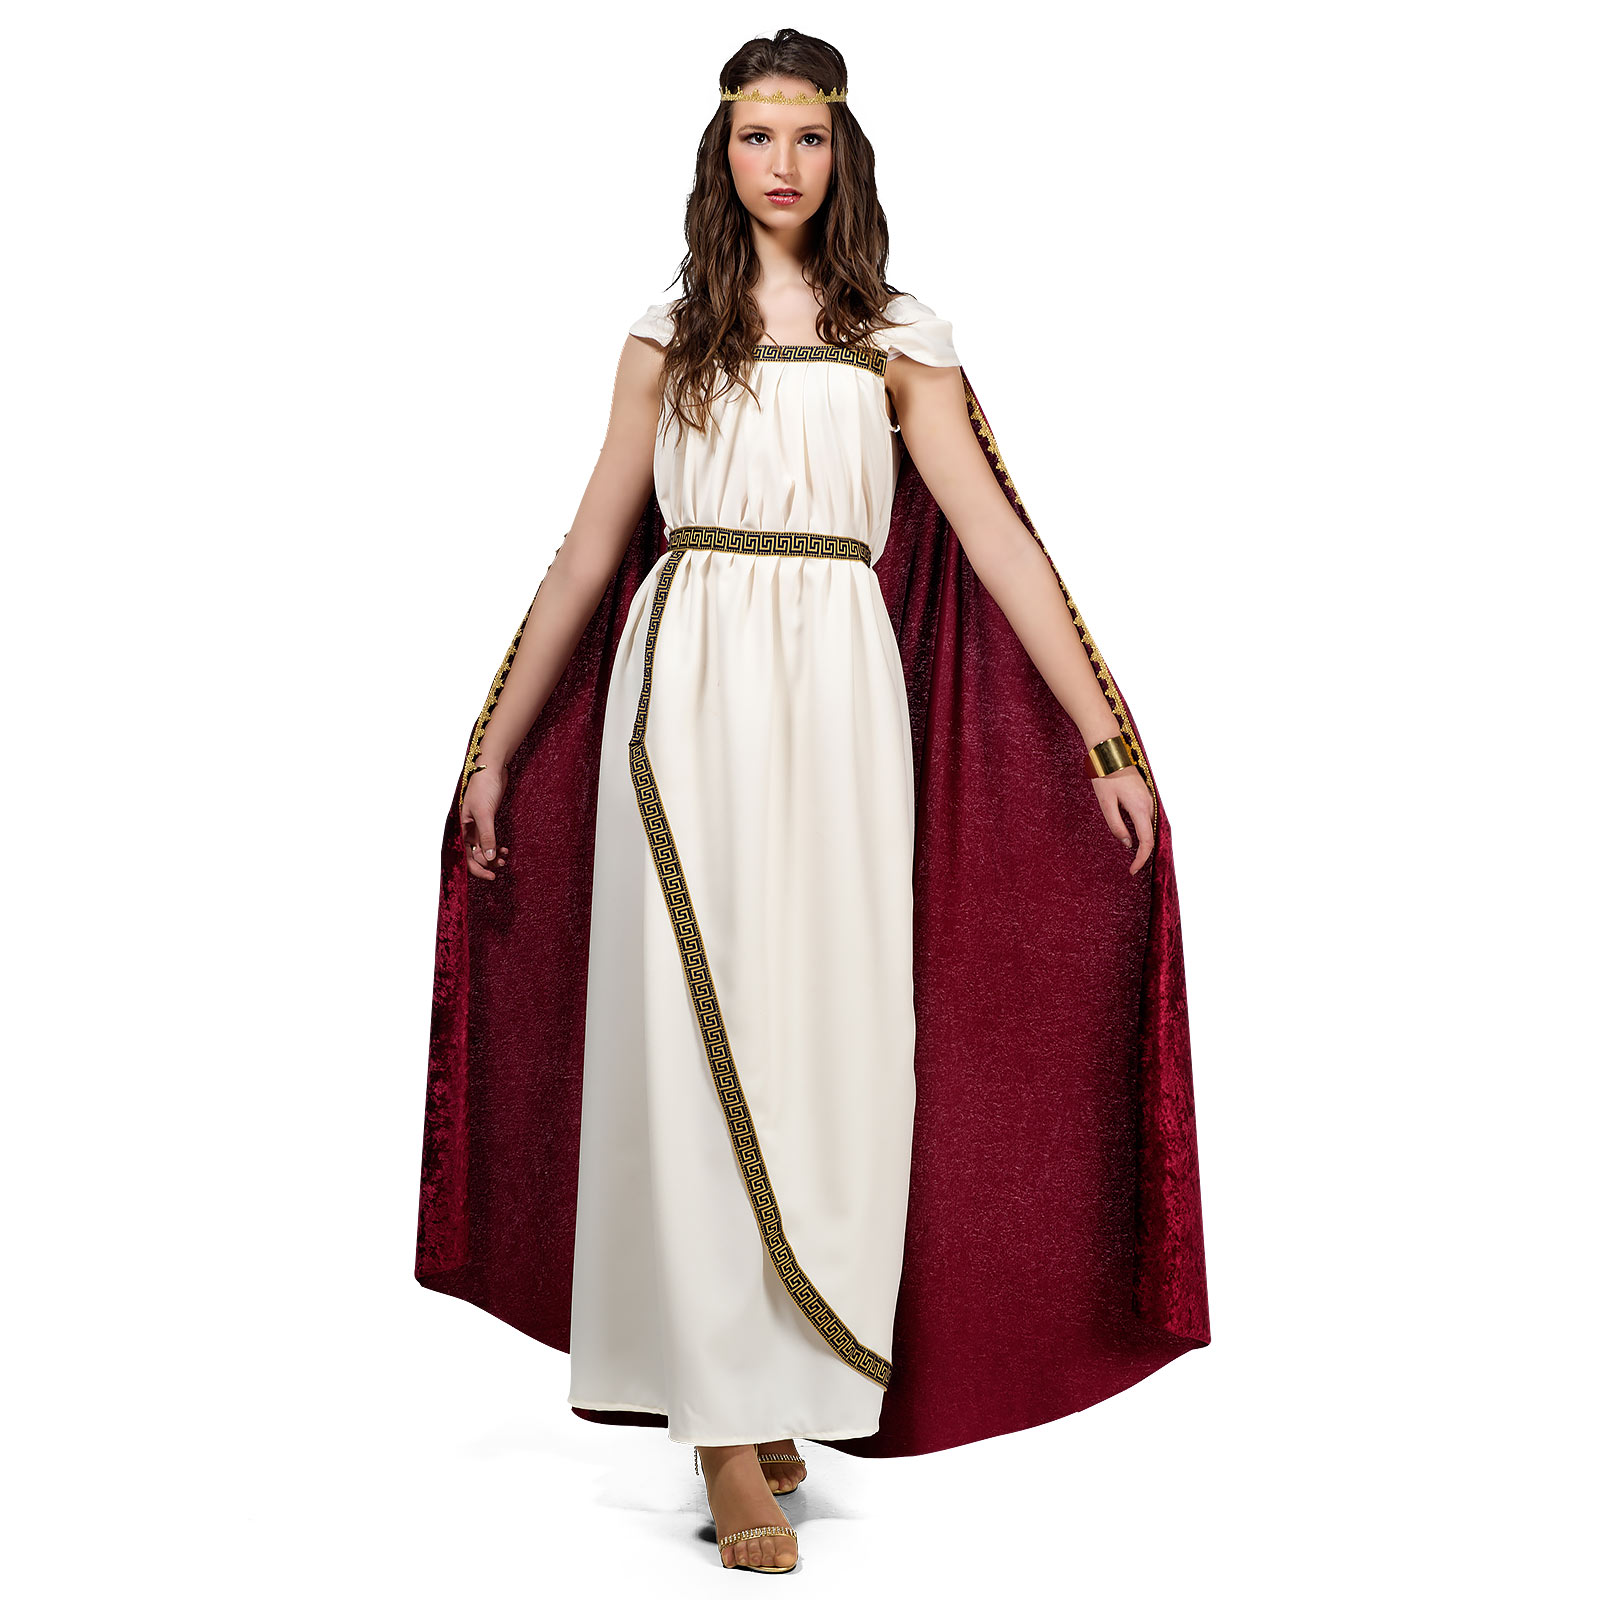 Trojanerin - Kostüm Damen